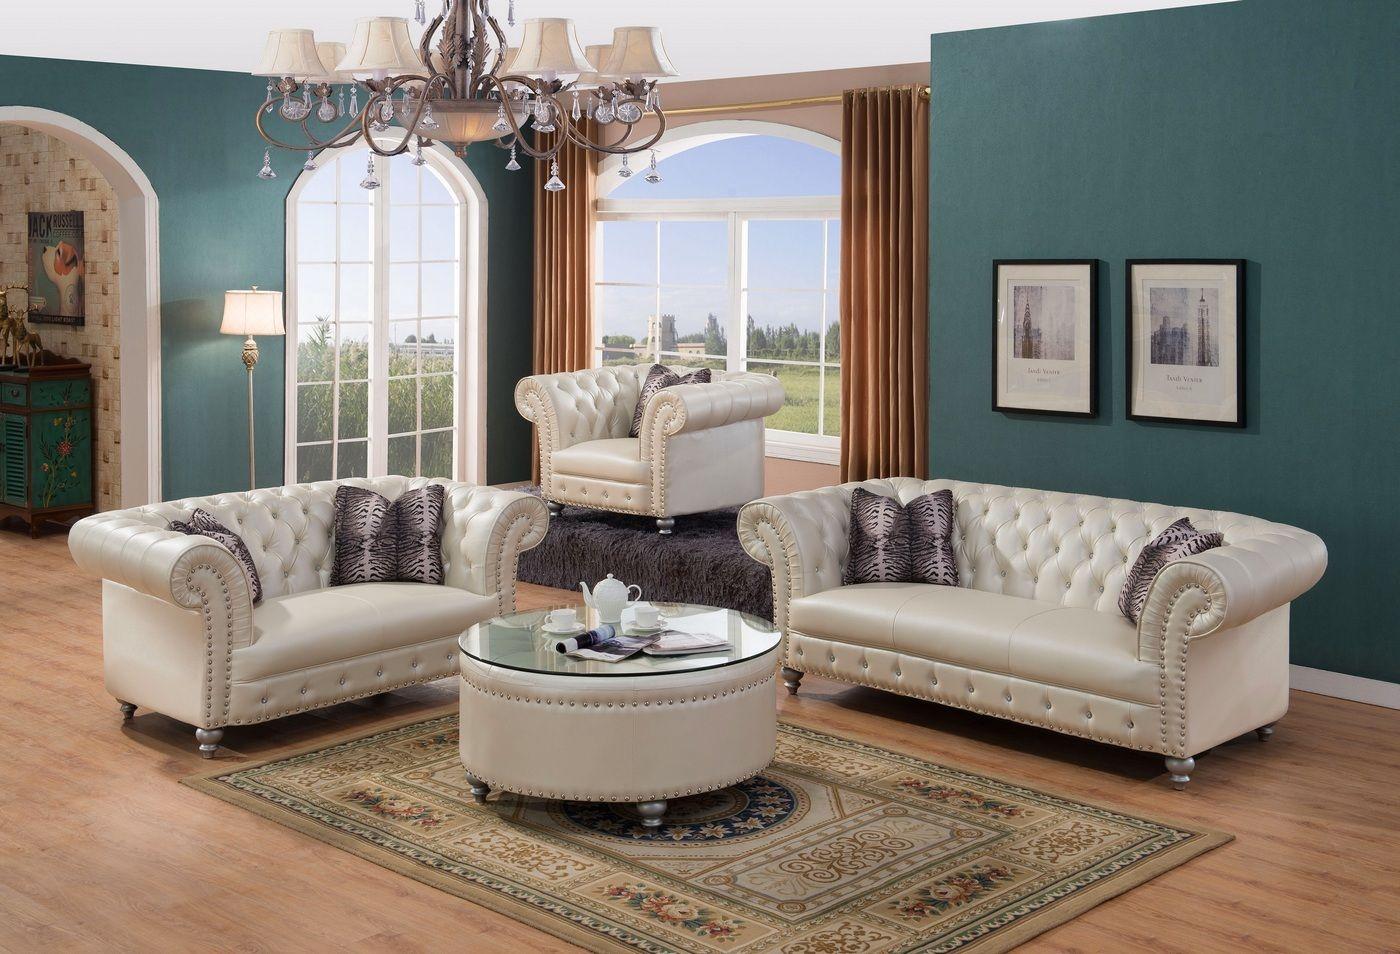 

    
McFerran SF1708-S Beige Bonded Leather Crystal Tufted Living Room Sofa
